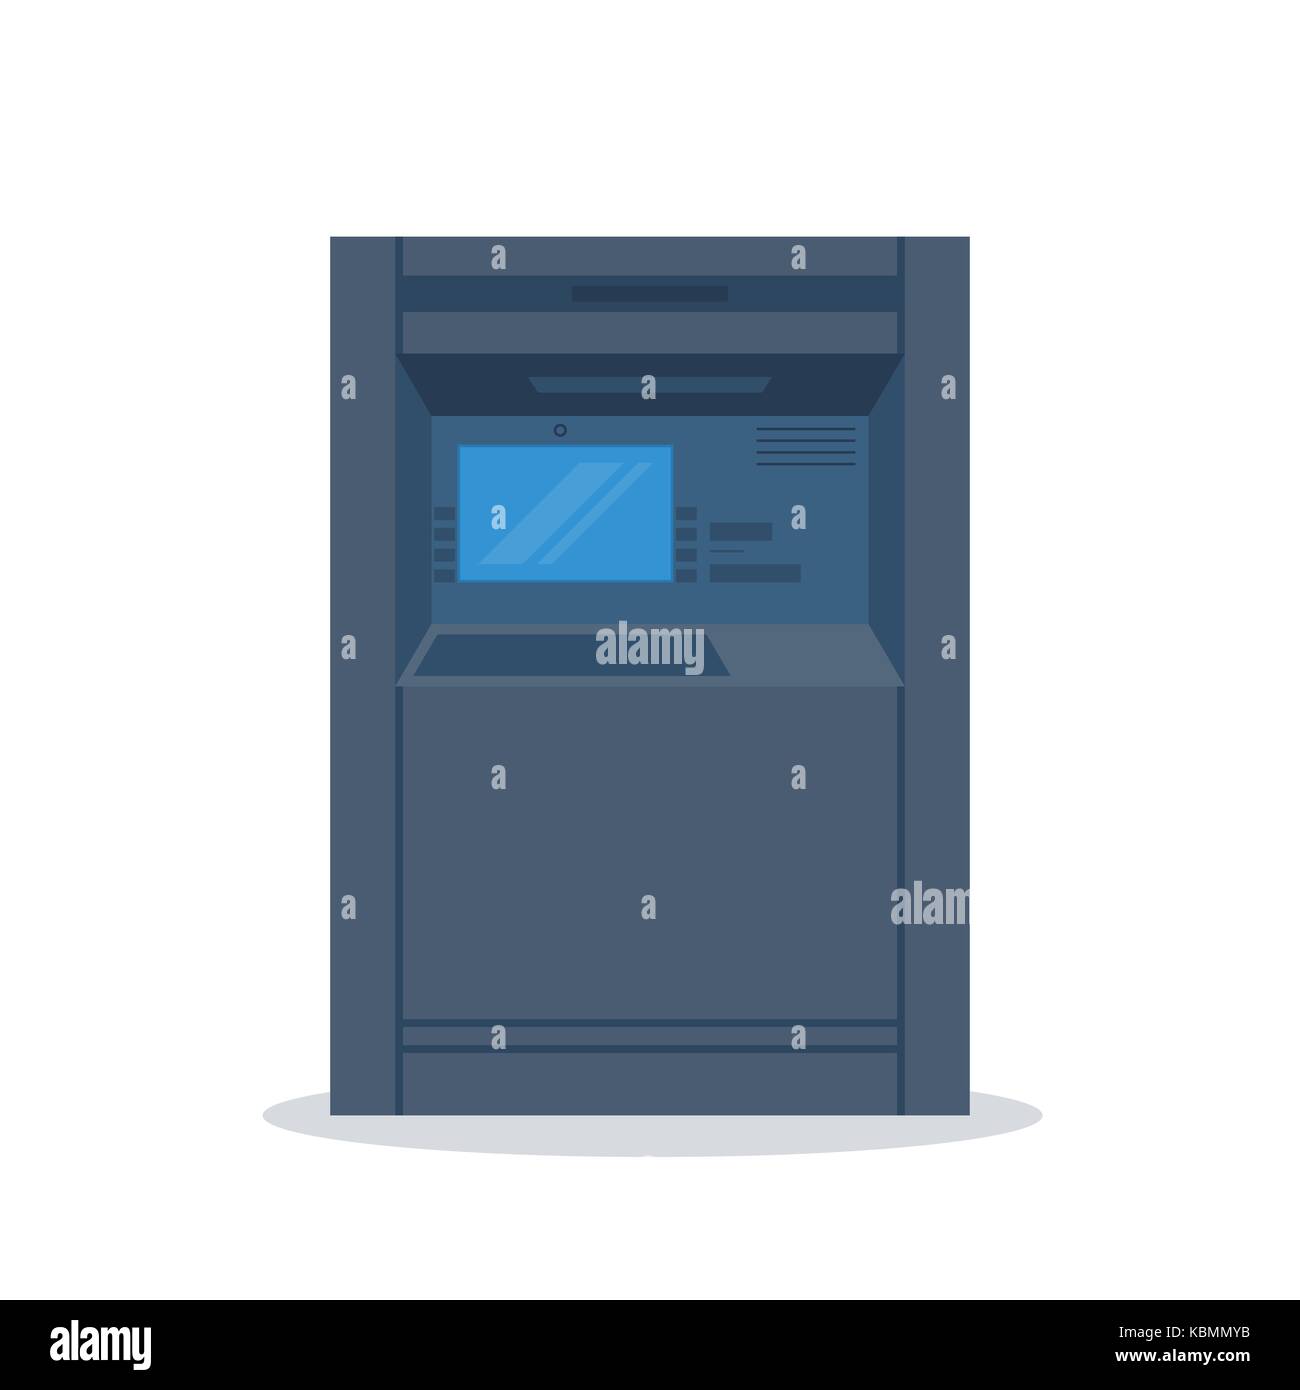 ATM machine illustration Stock Vector